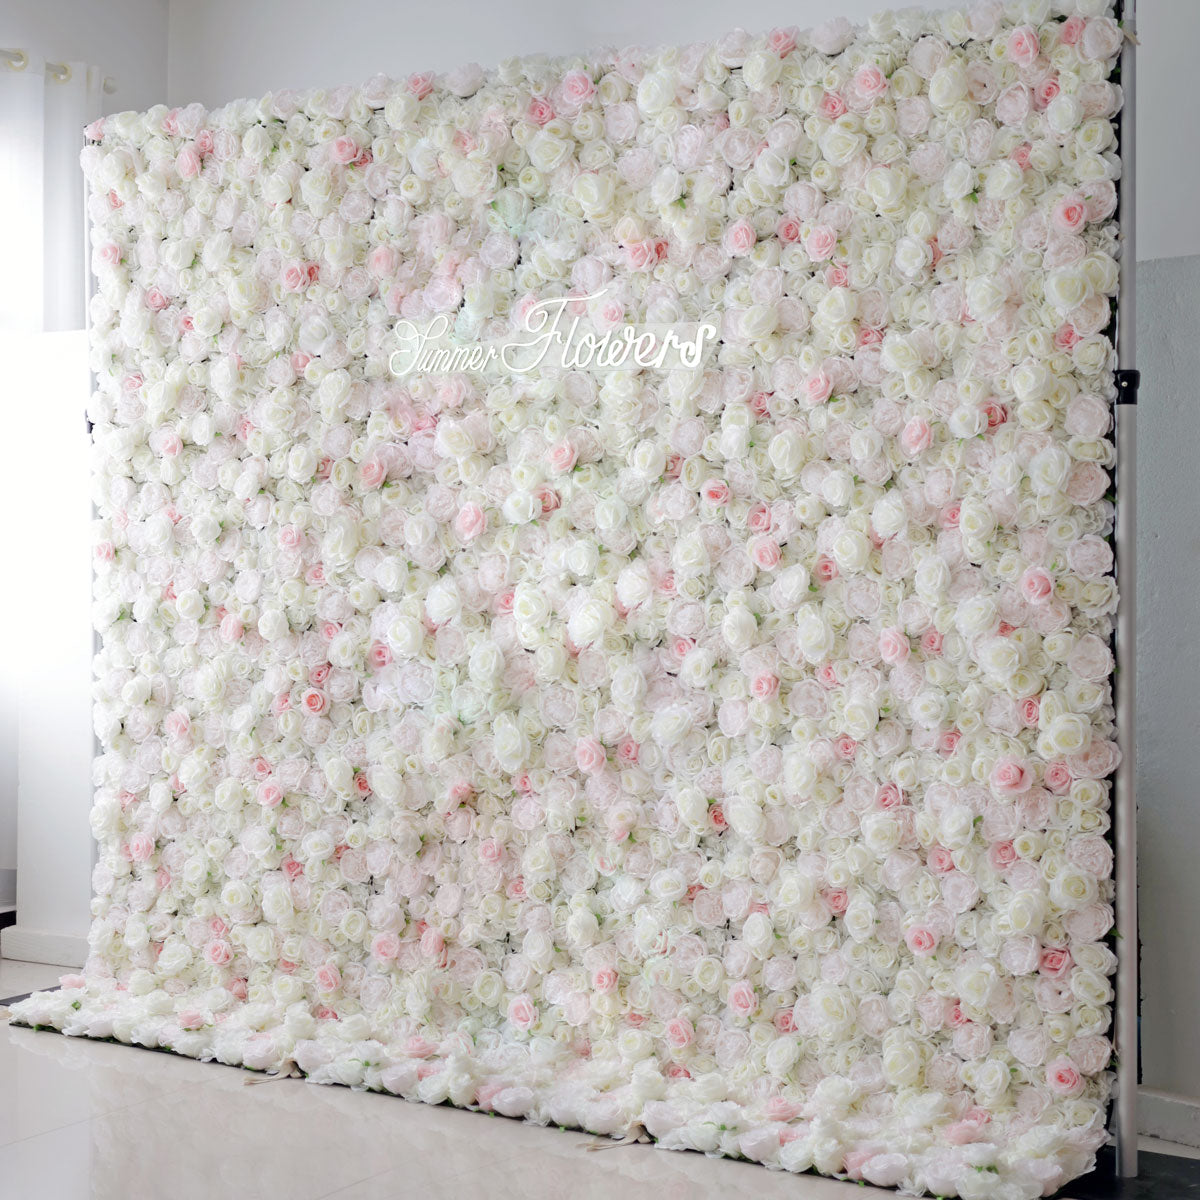 Summer Flower:CB-182 8ft*8ft Cloth Back Artificial Flower Wall Backdrop